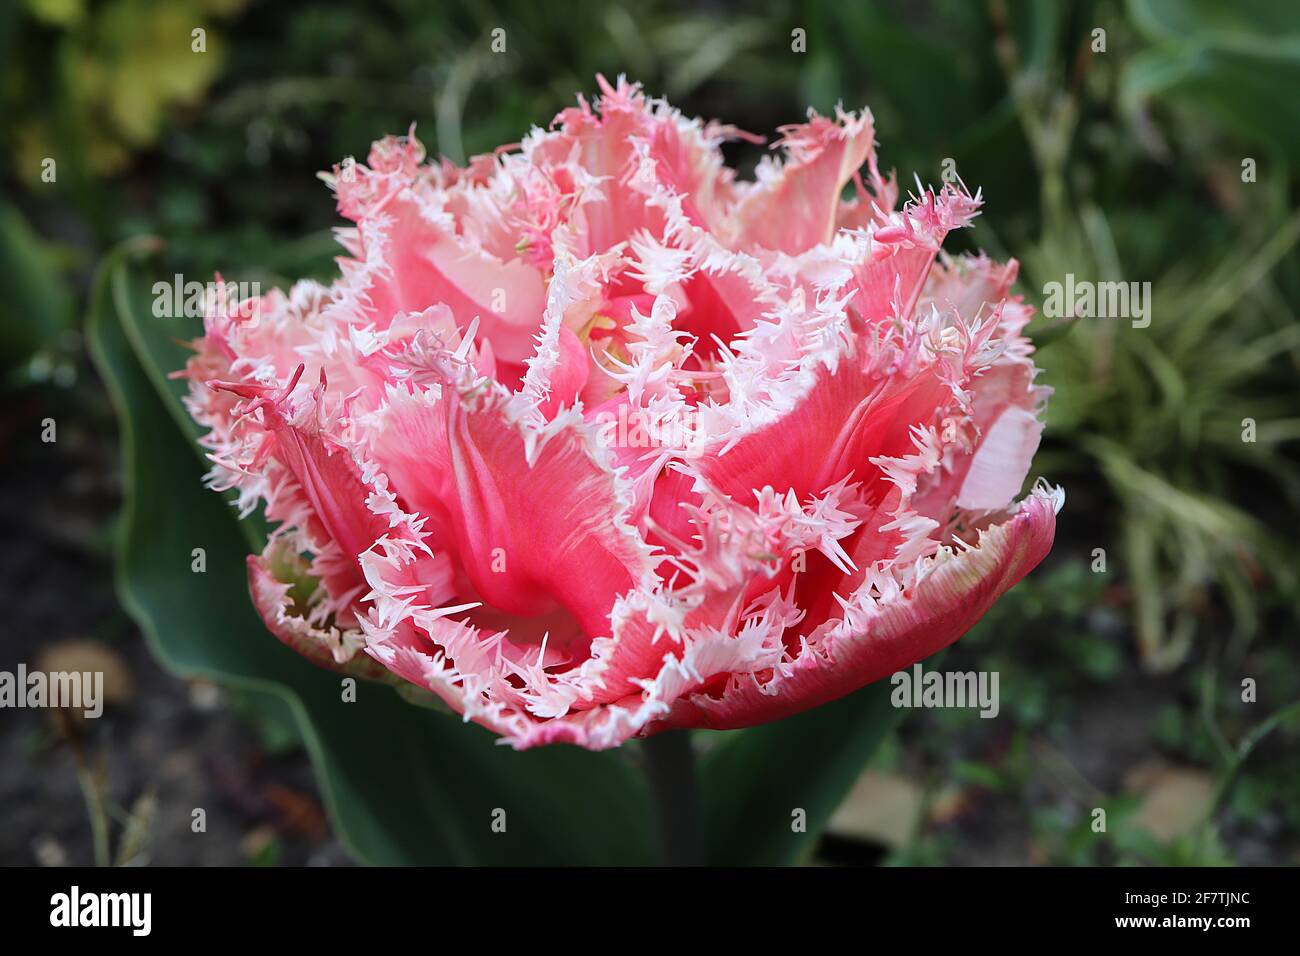 Tulipa ‘Queensland’ umsäumte 7 Queensland Tulpe - zuckersüße rosa Blüten, weiße Fransen, April, England, Großbritannien Stockfoto